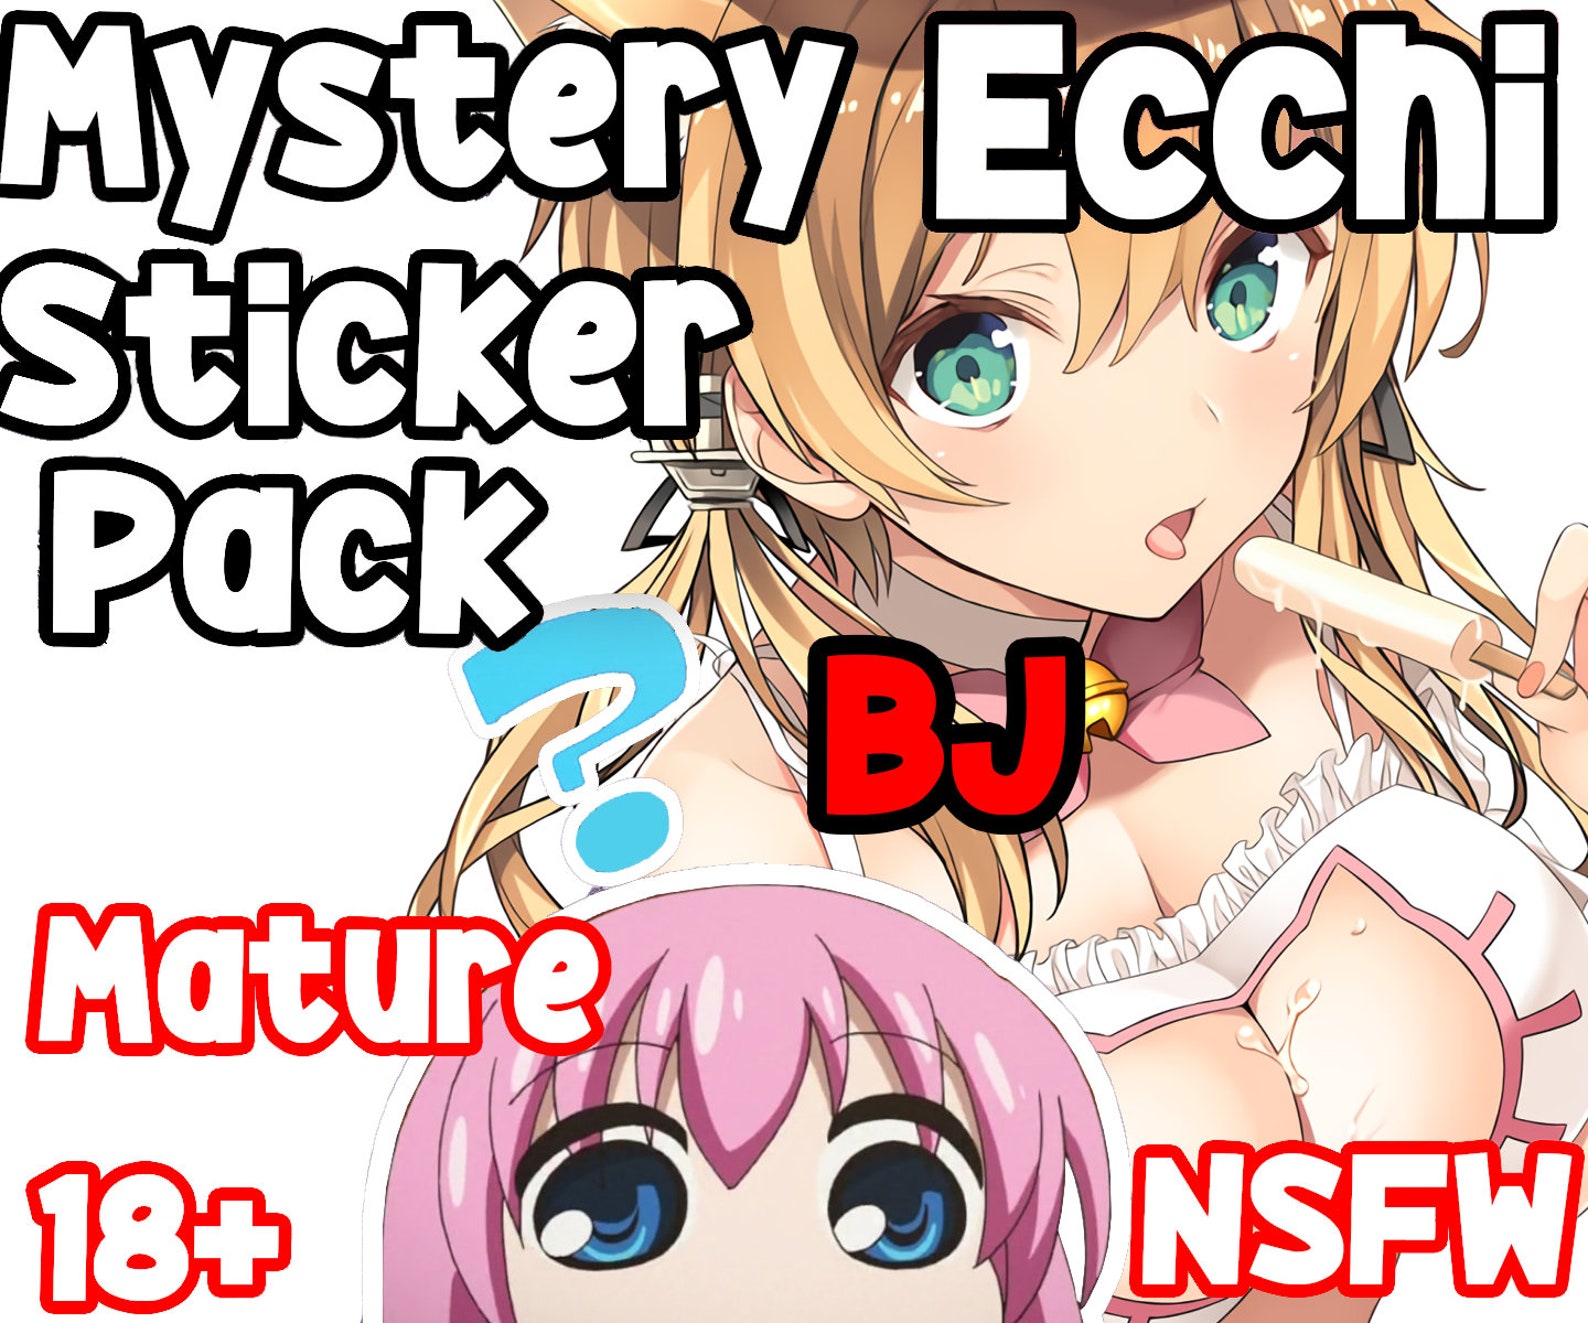 Mystery Ecchi Anime Sticker Pack BJ Mature NSFW Laptop | Etsy